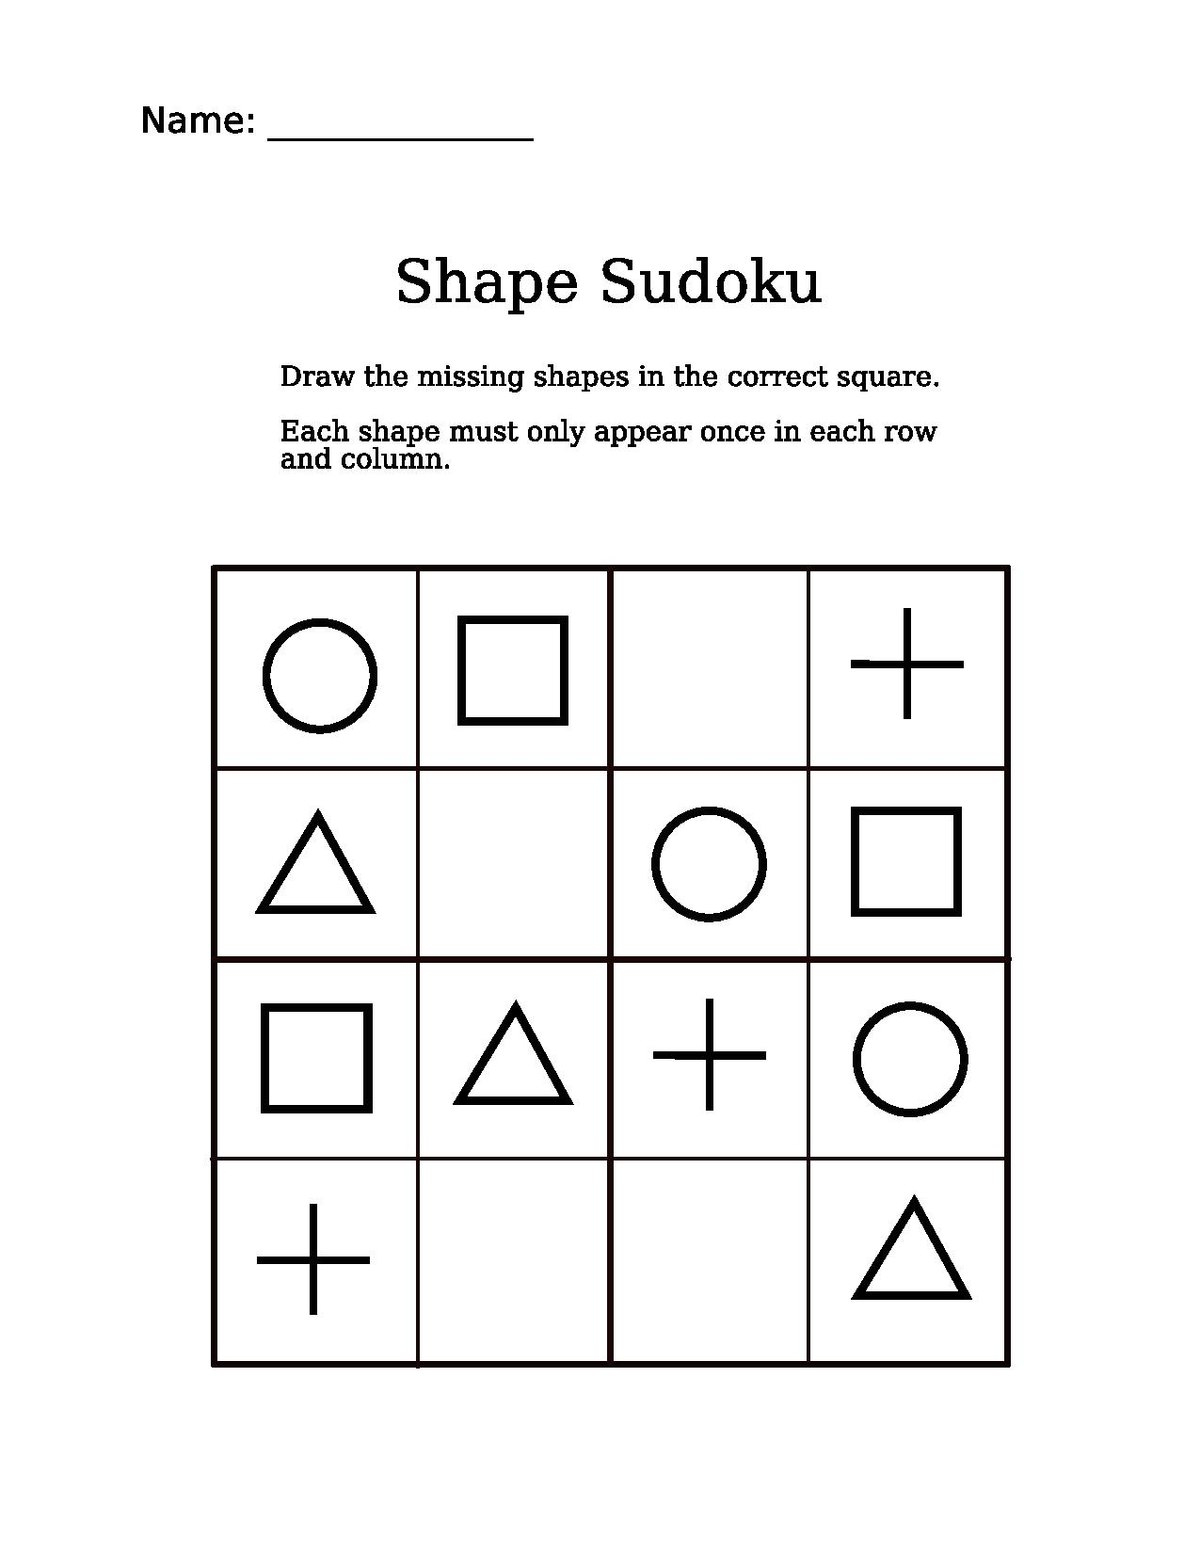 File:4X4 Shapes Sudoku Puzzle.pdf - Wikimedia Commons